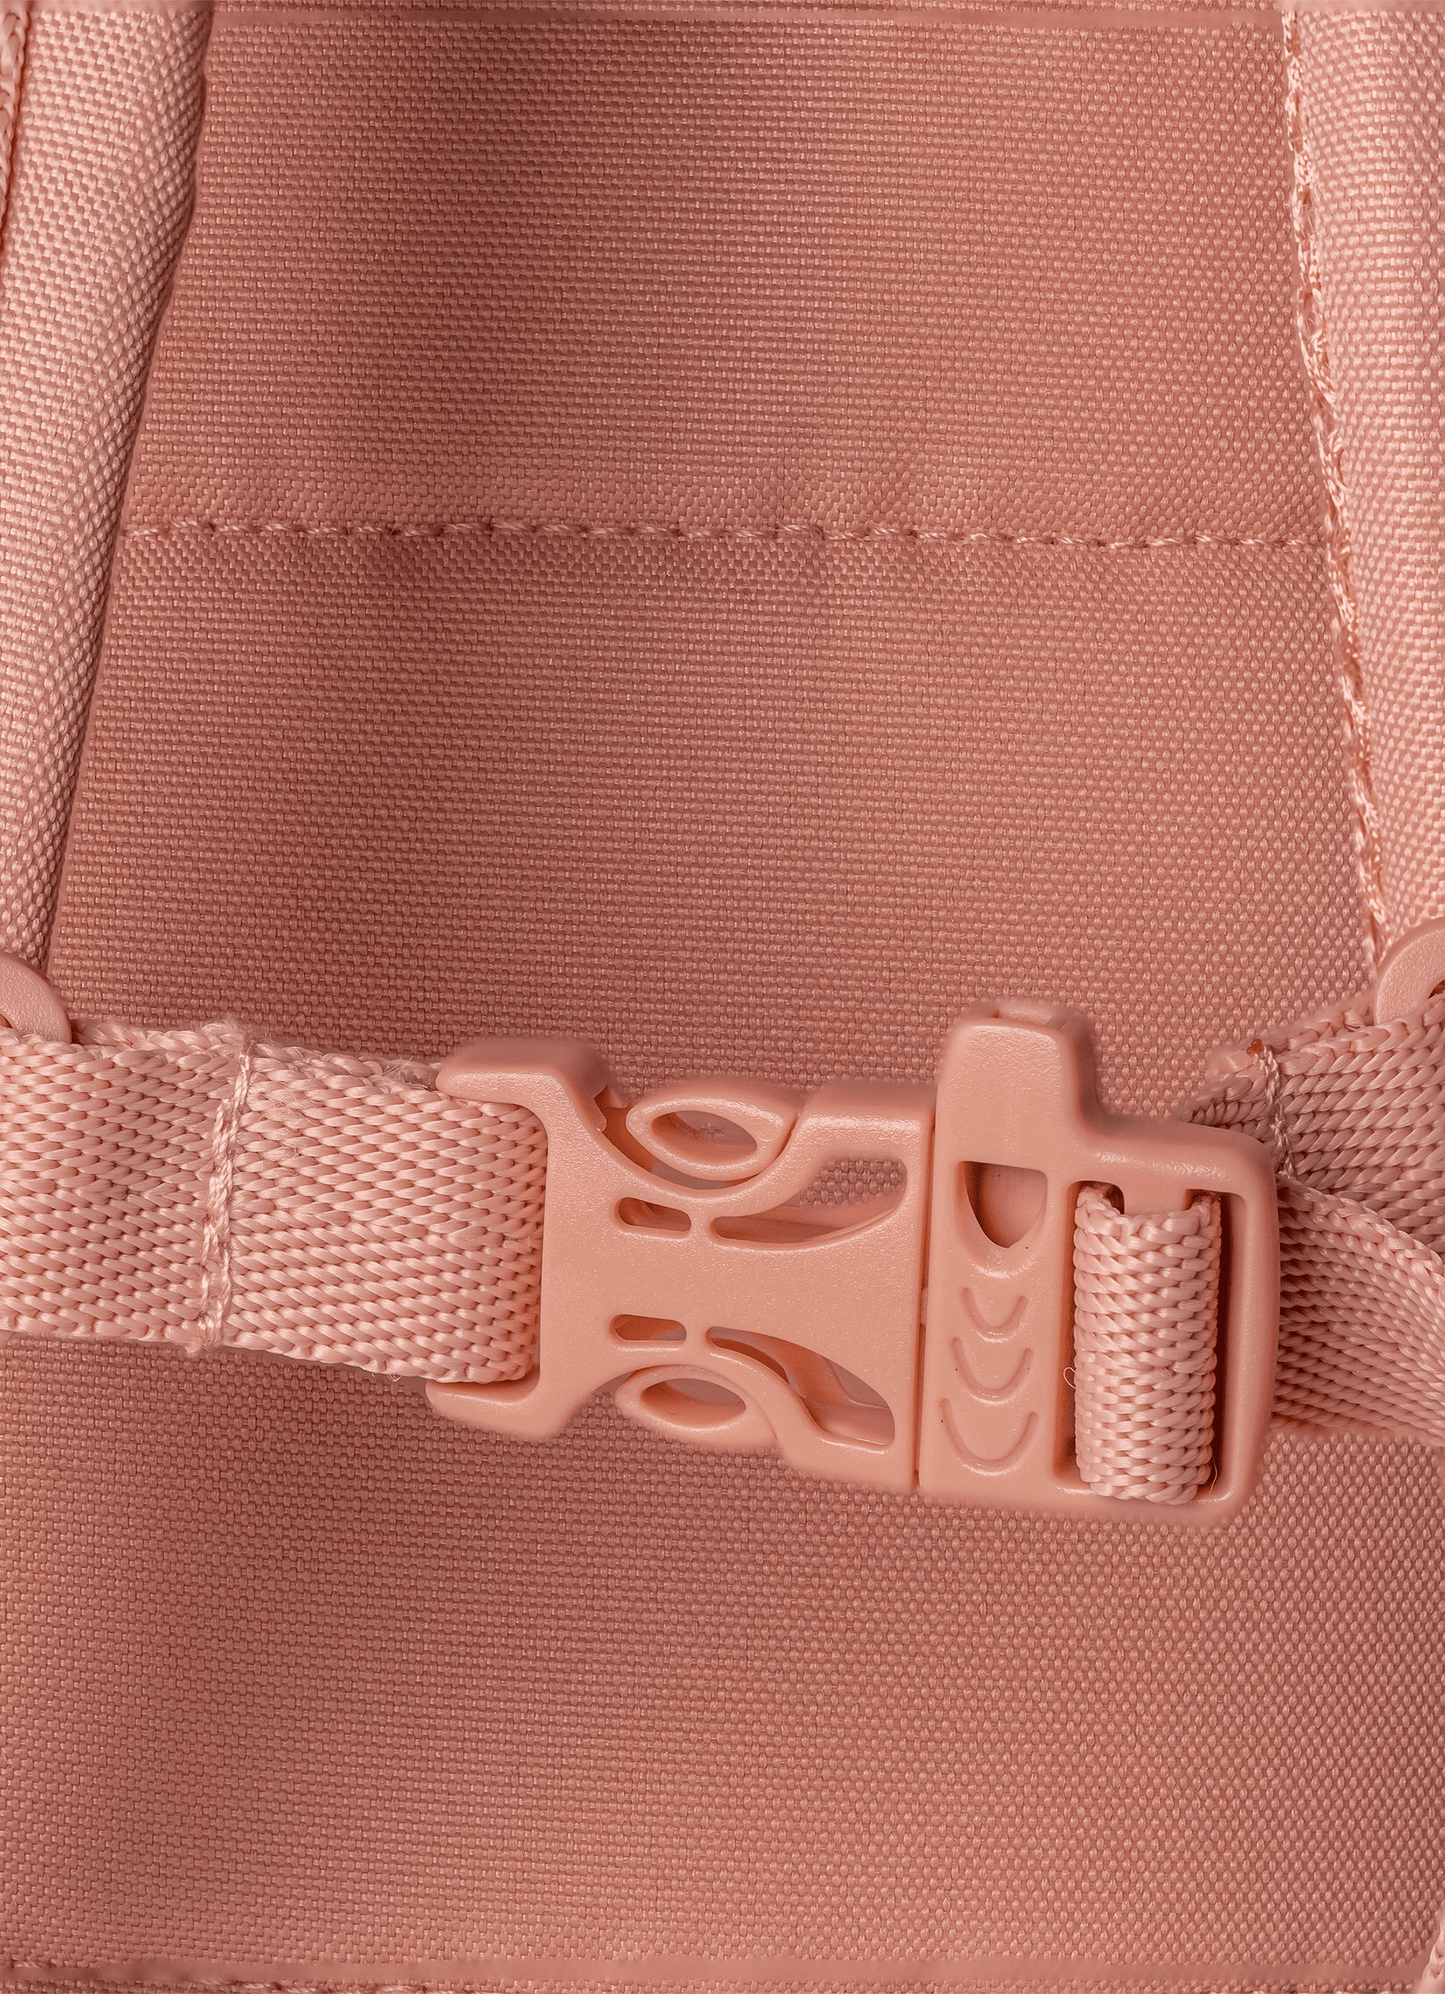 Medium Backpack - Blush Pink